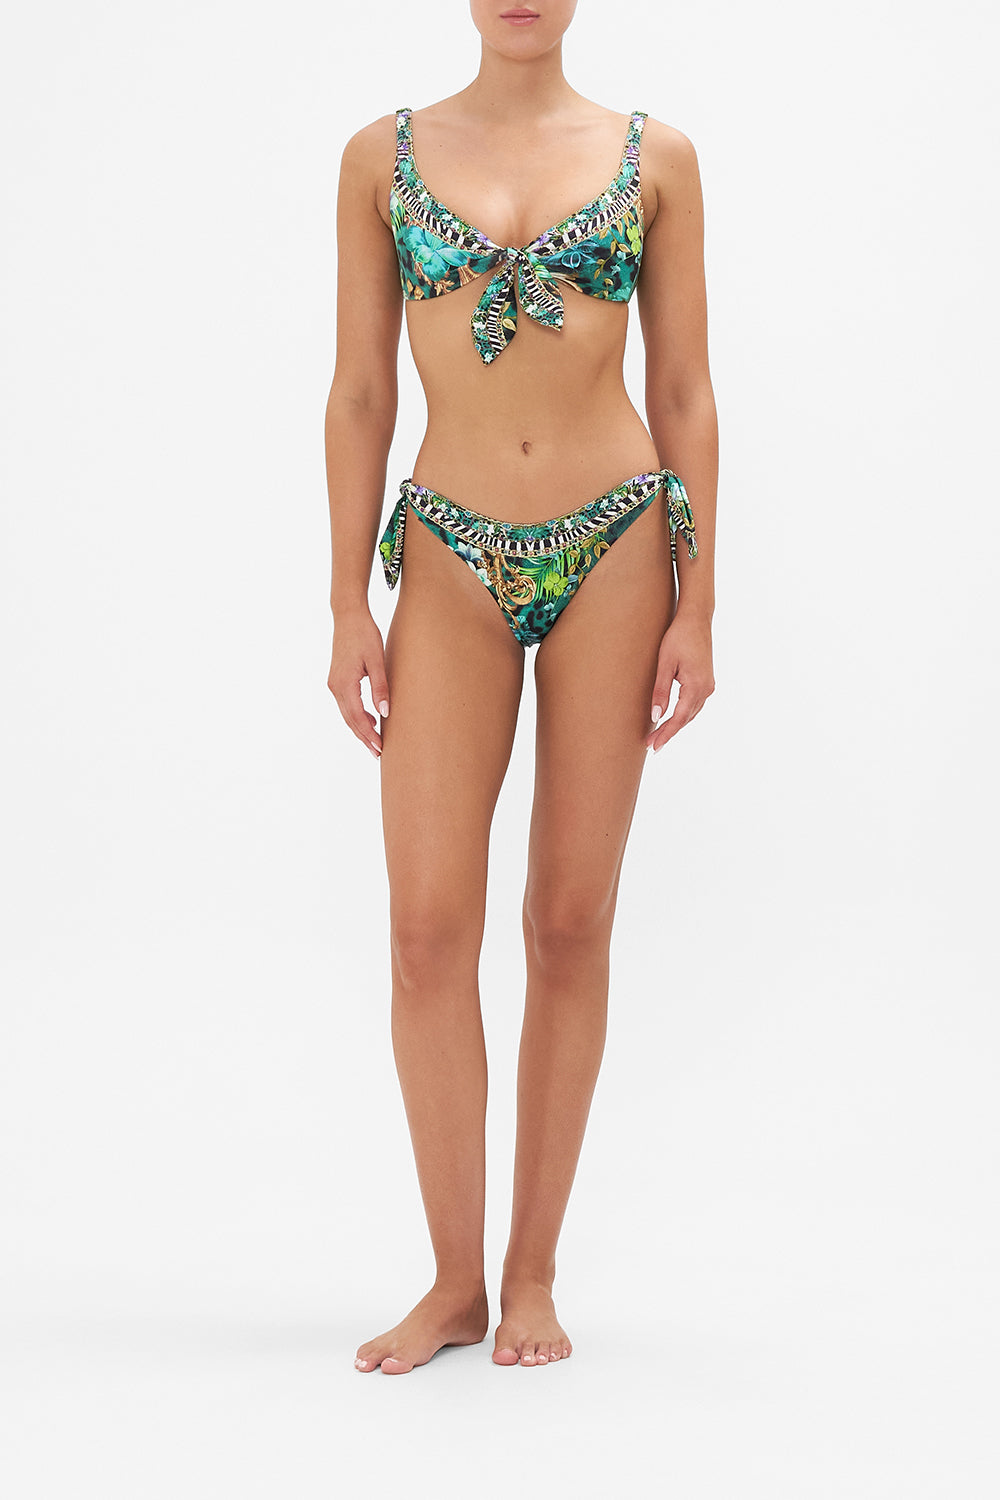 Product view of CAMILLA green resort wear bikini top in Sing My Song print